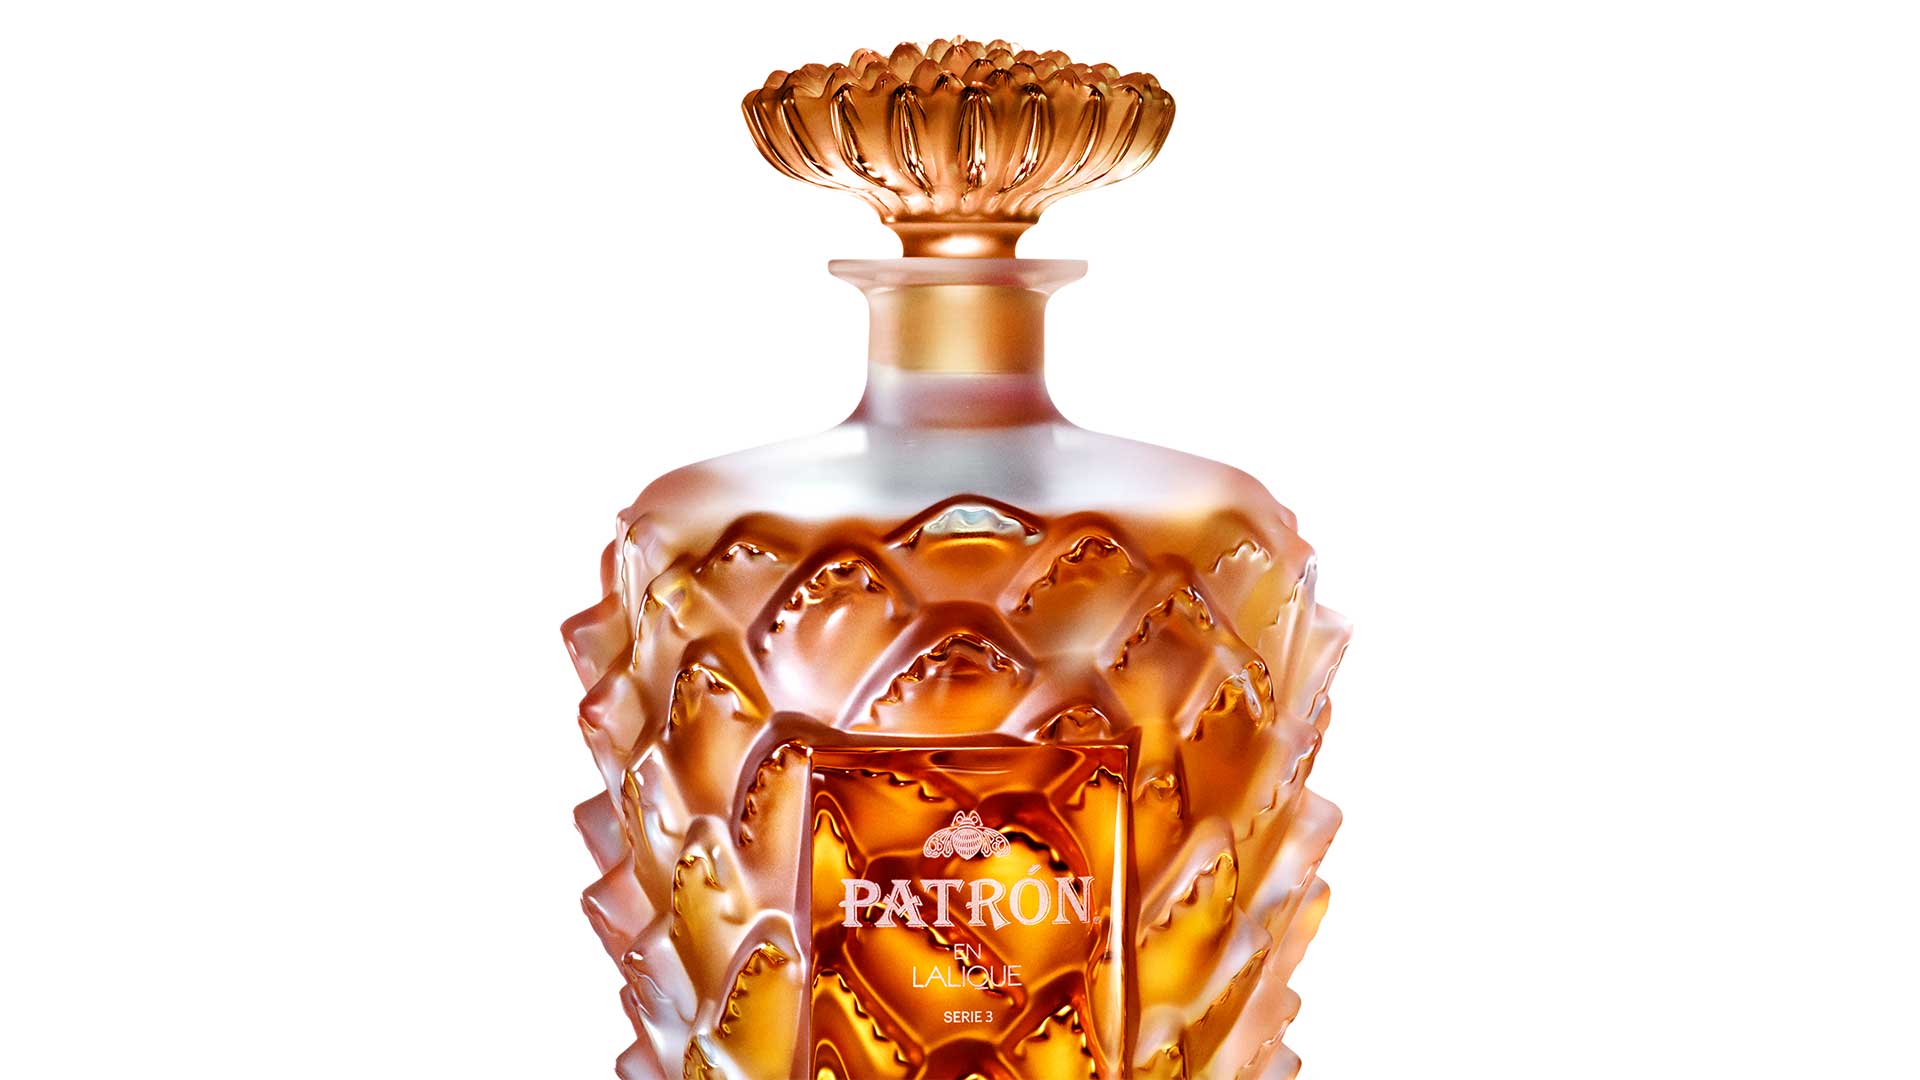 Dettaglio-bottiglia-Patrón-en-Lalique-Serie-3-Robb-Report-Italia